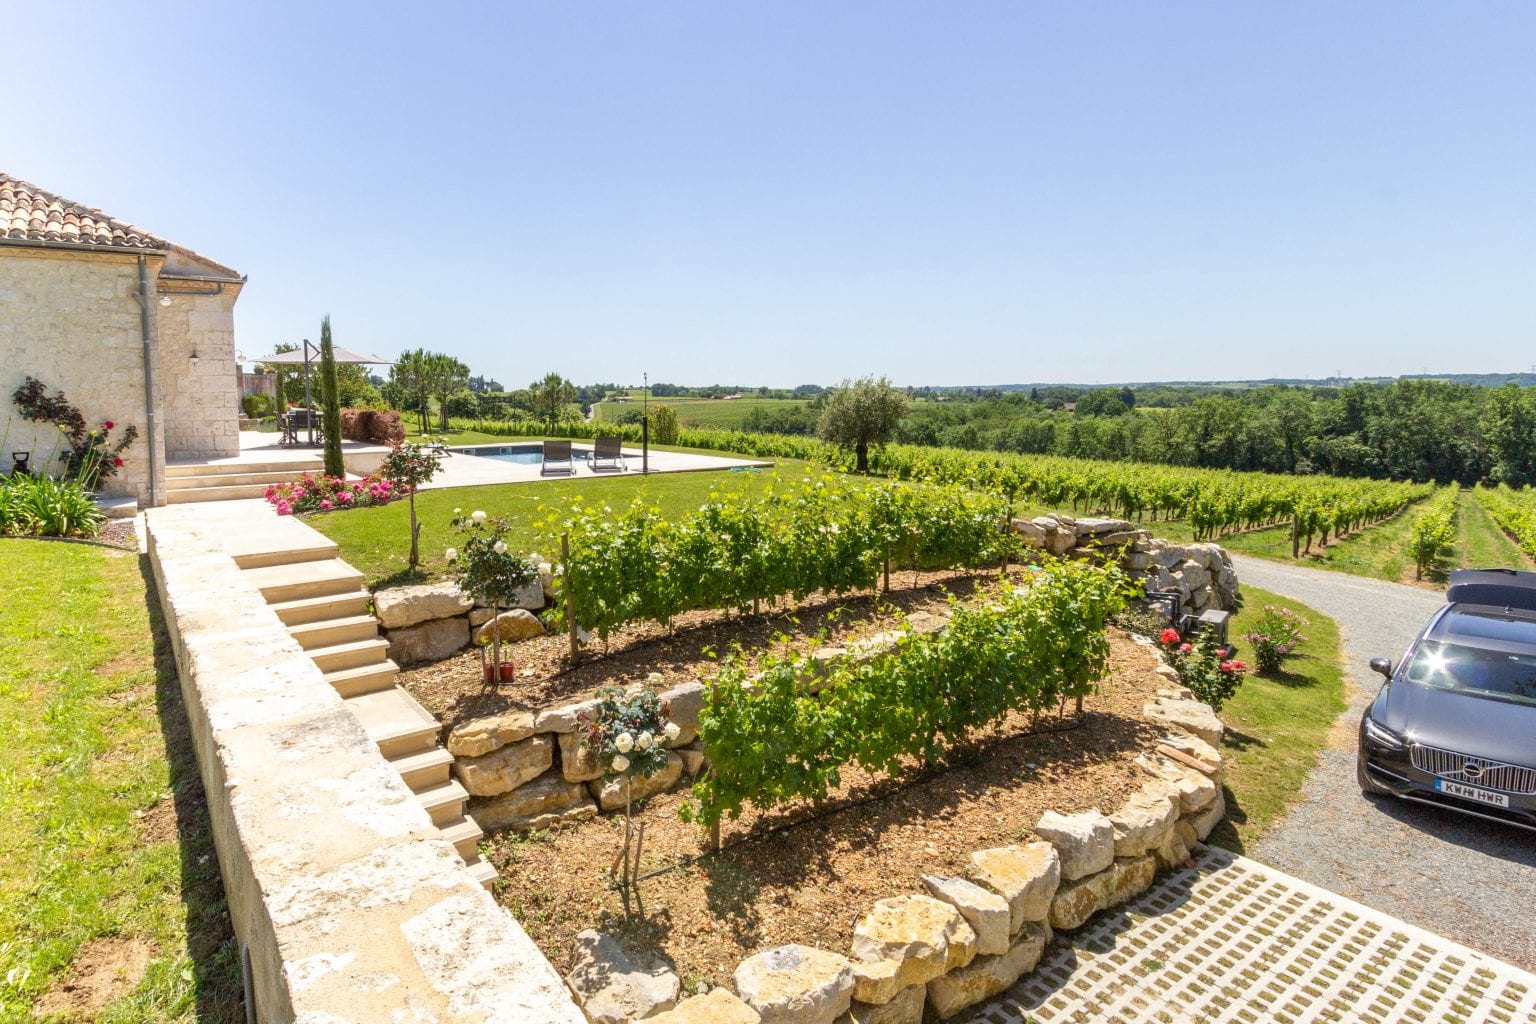 La Citadelle is situated on a vineyard